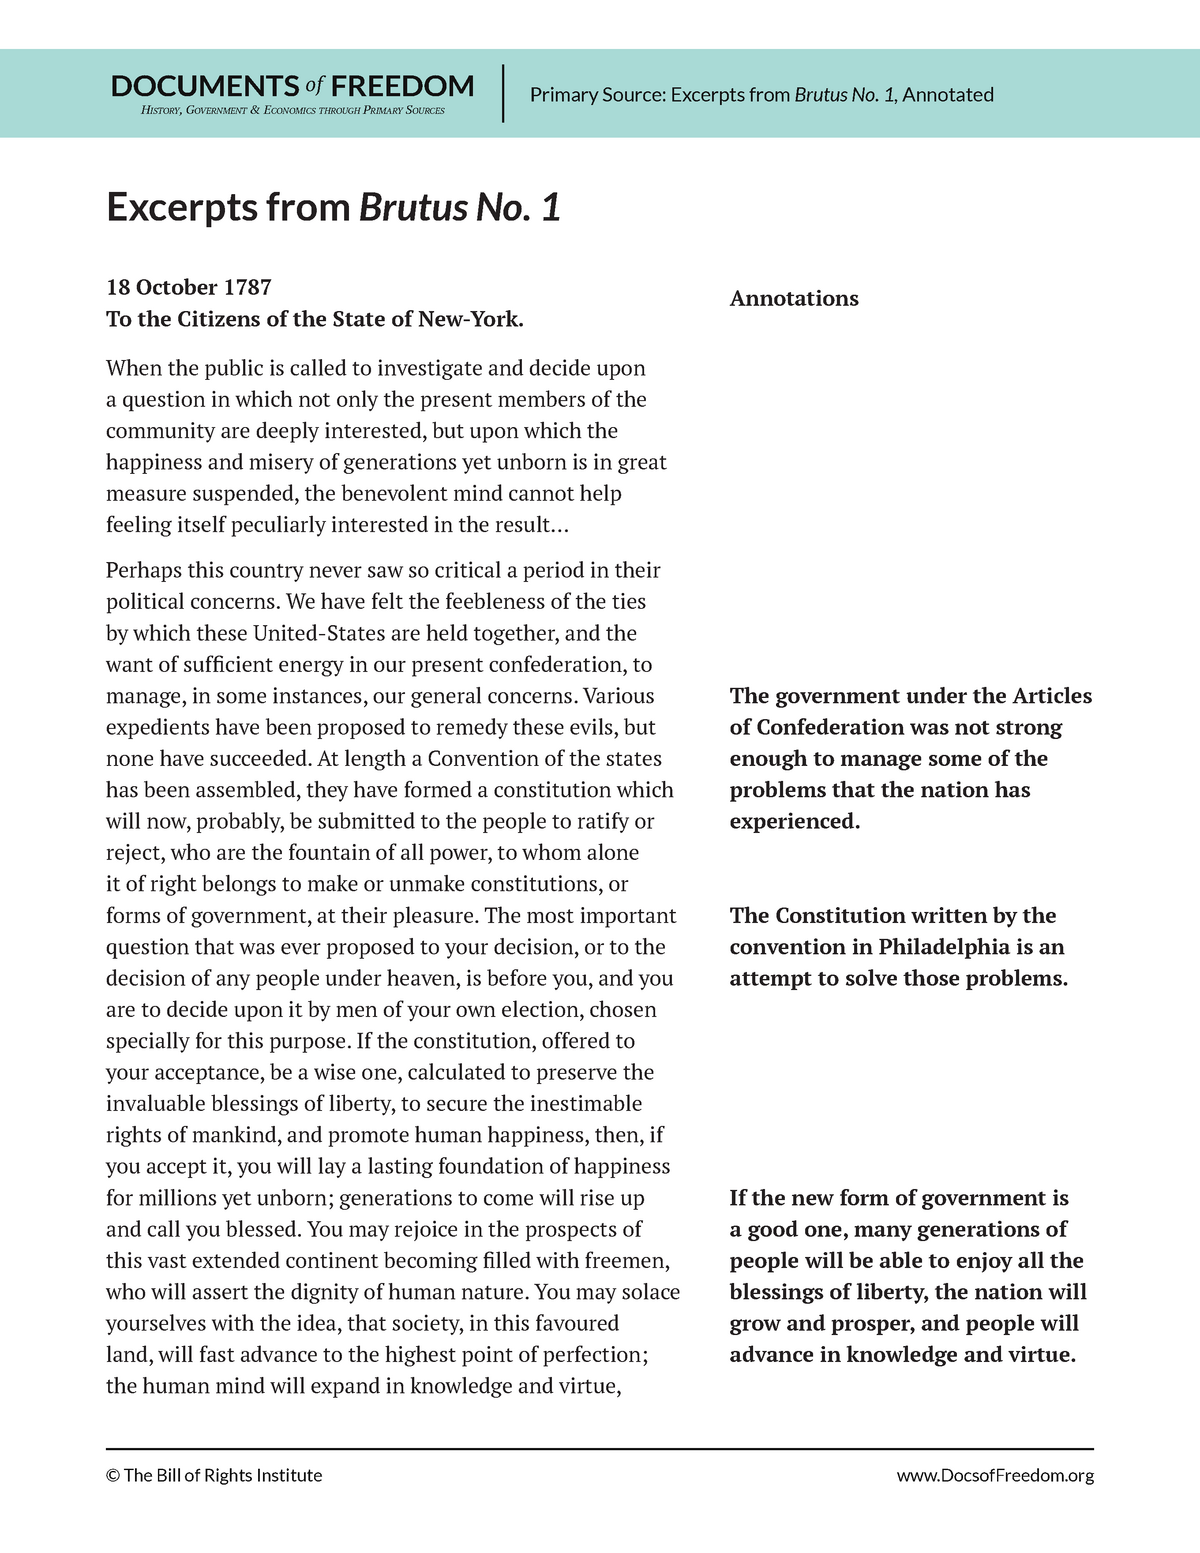 brutus essay 1 summary